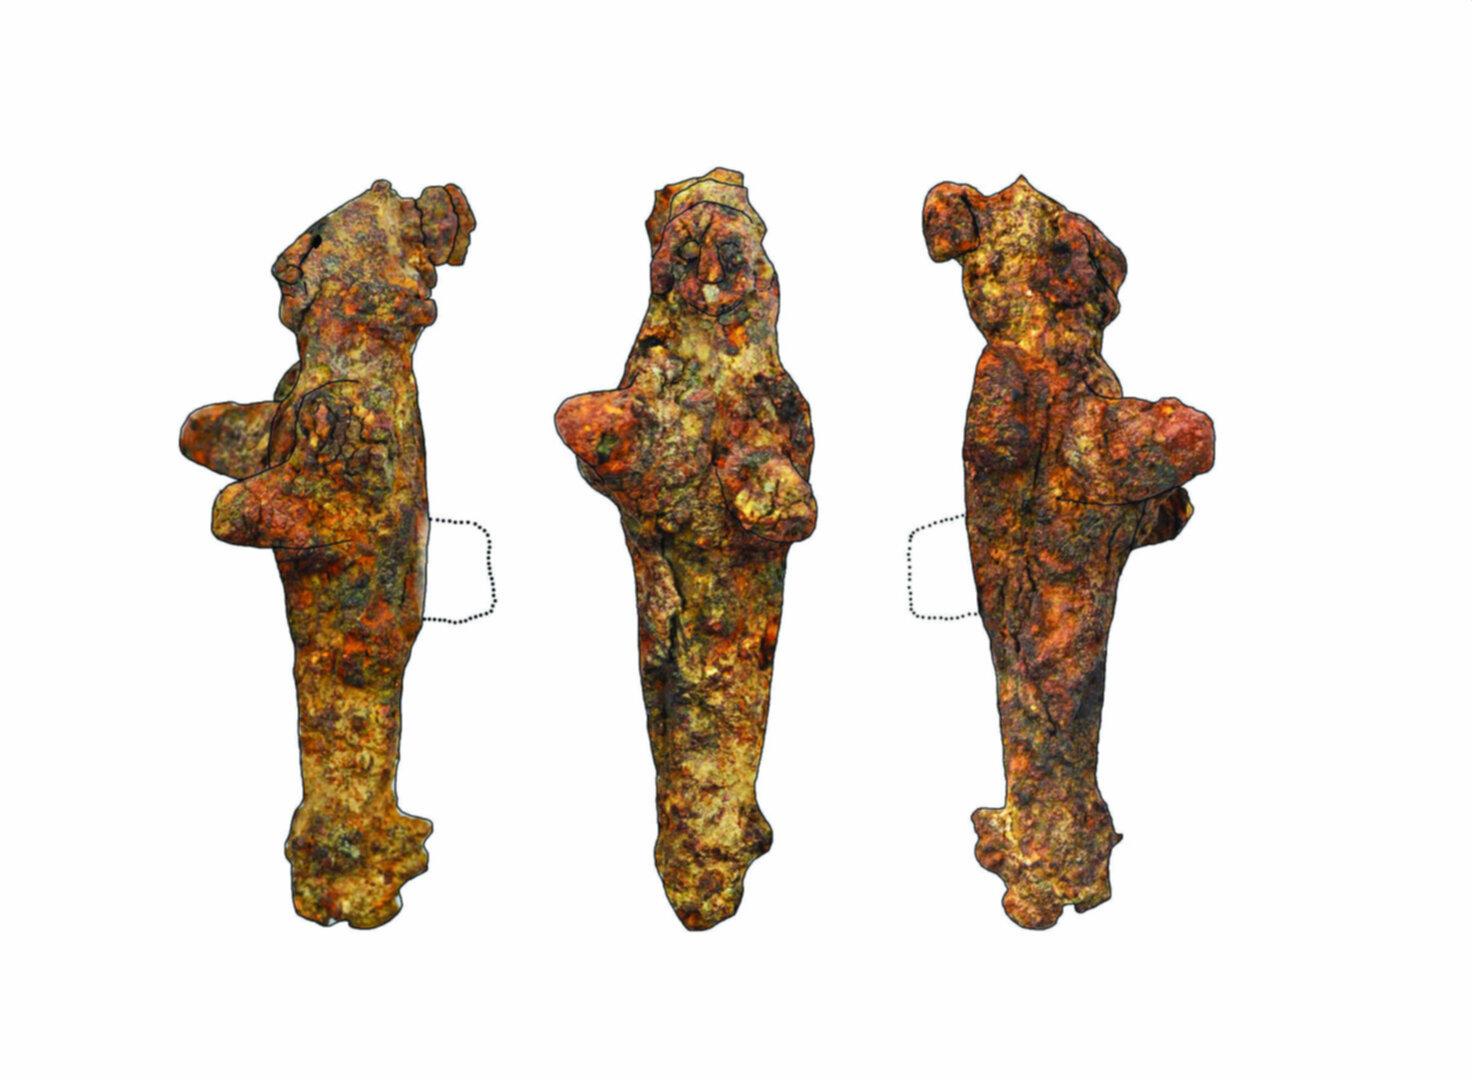 12- Early Hittite period figurines 